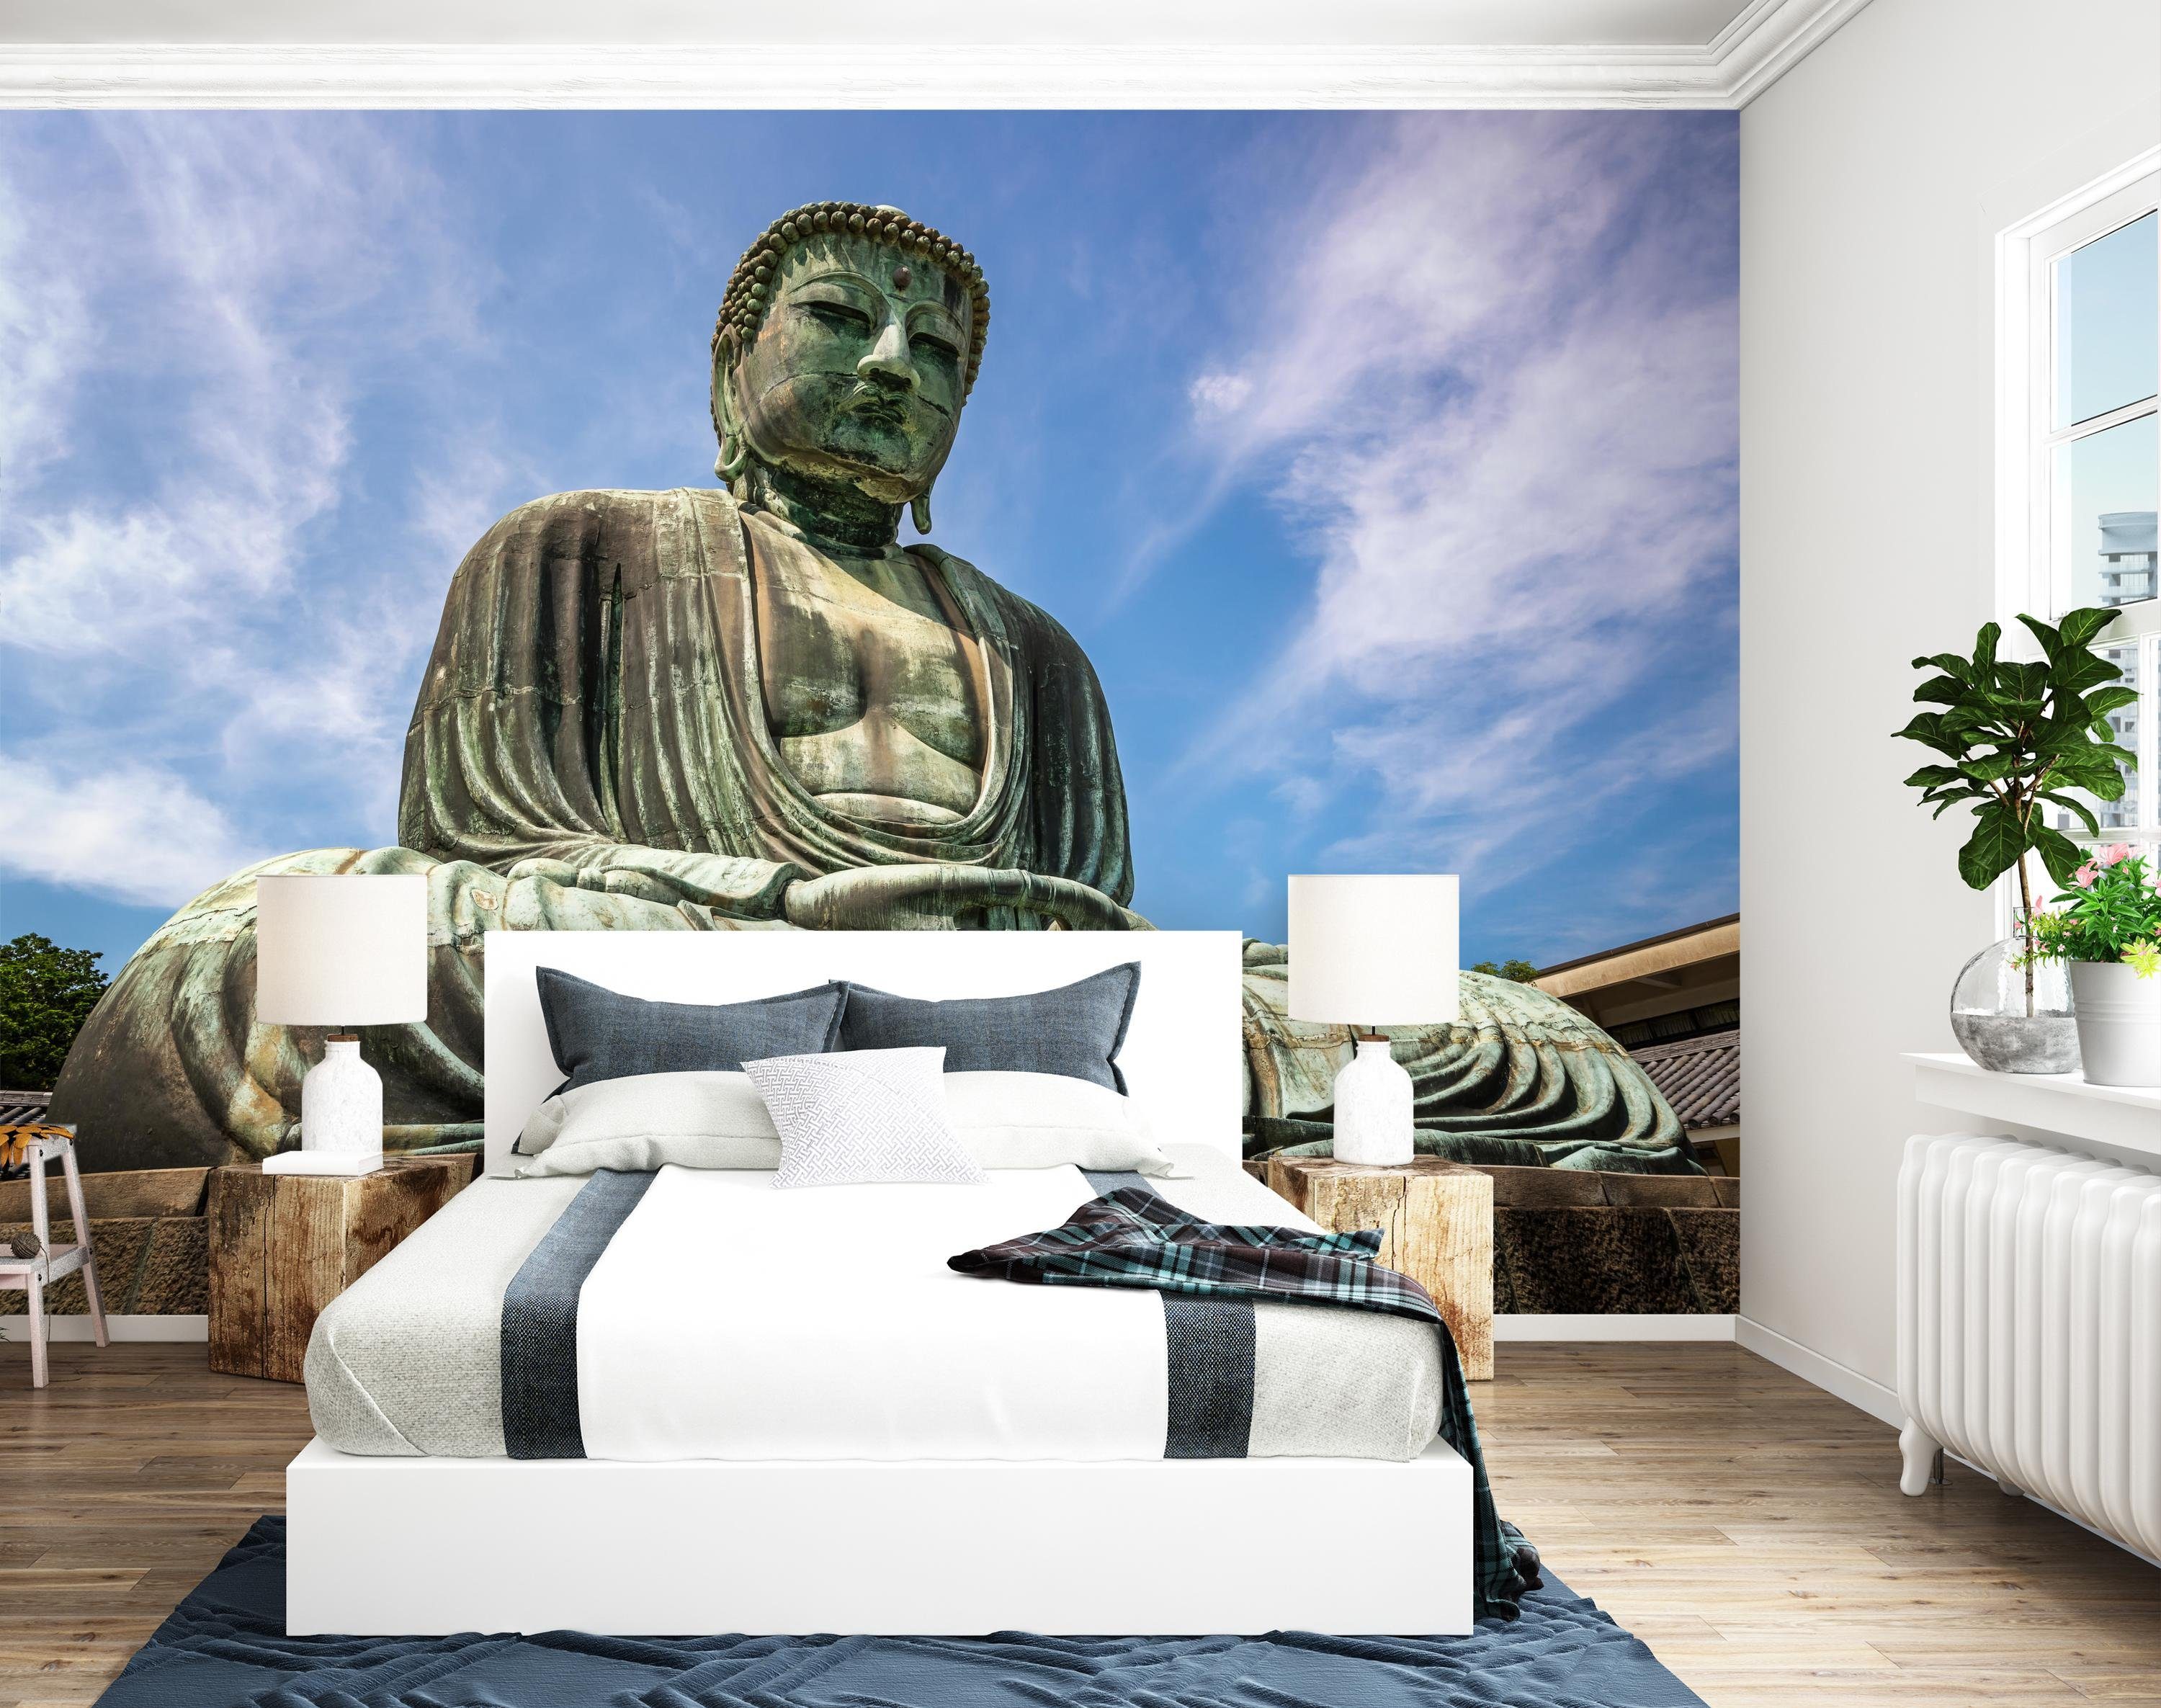 Fototapete von Buddha wandmotiv24 glatt, Große Motivtapete, matt, Der Wandtapete, Vliestapete Kamakura,